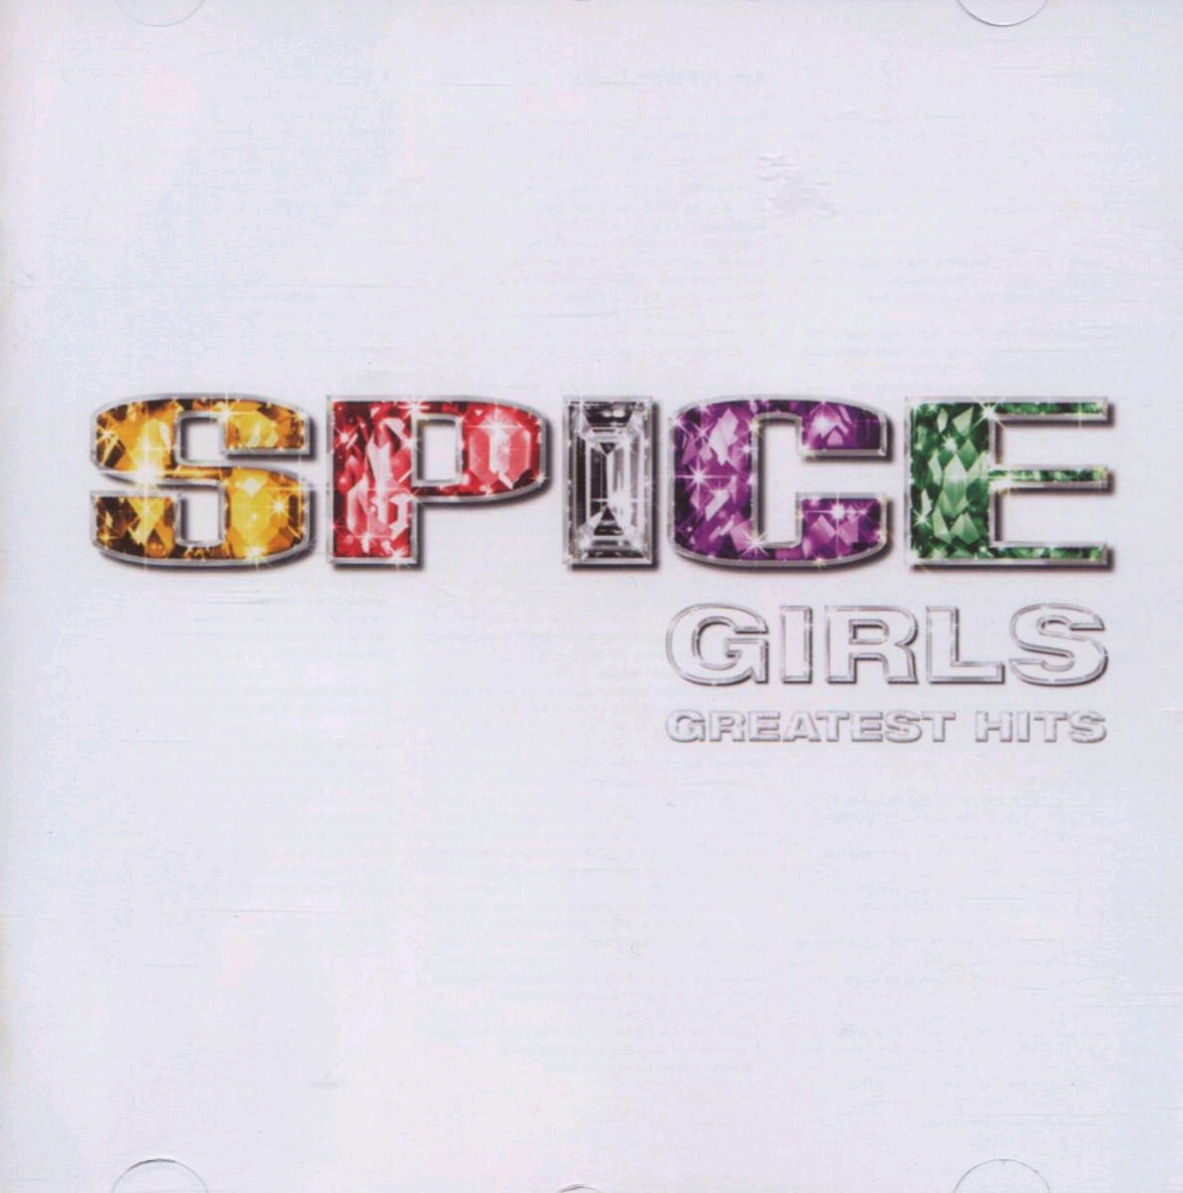 Greatest Hits Spice Girls Cd Mymediaweltde Shop Für Cd Dvd Blu Ray Filme Serien